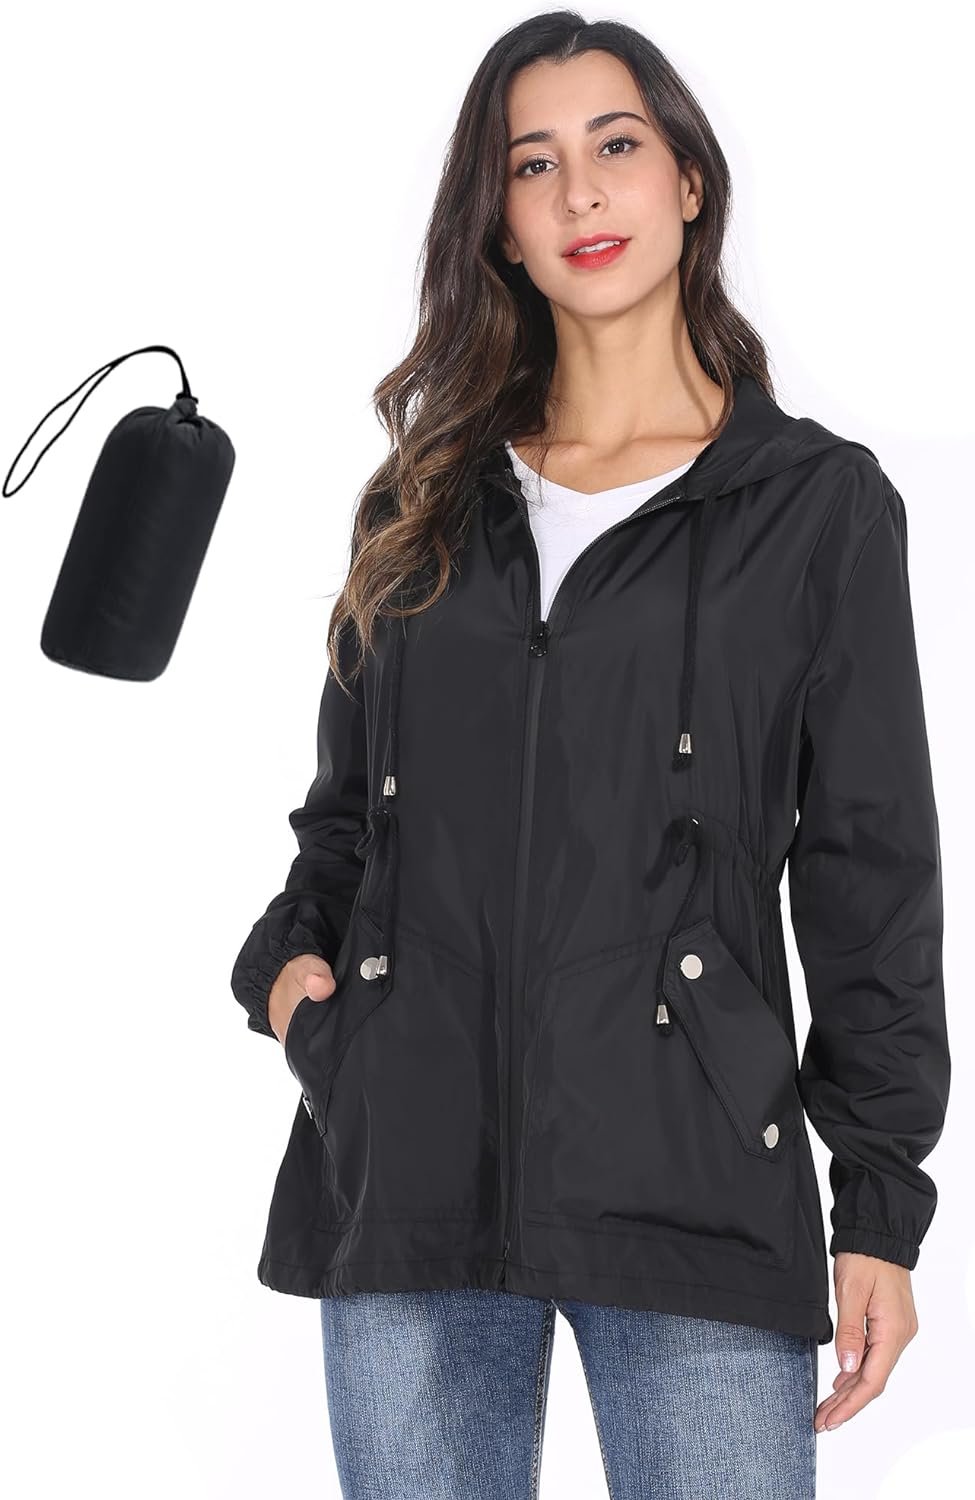 JTANIB Women Packable Rain Jacket Waterproof Lightweight Raincoat Hooded for Hiking Outdoor Travel